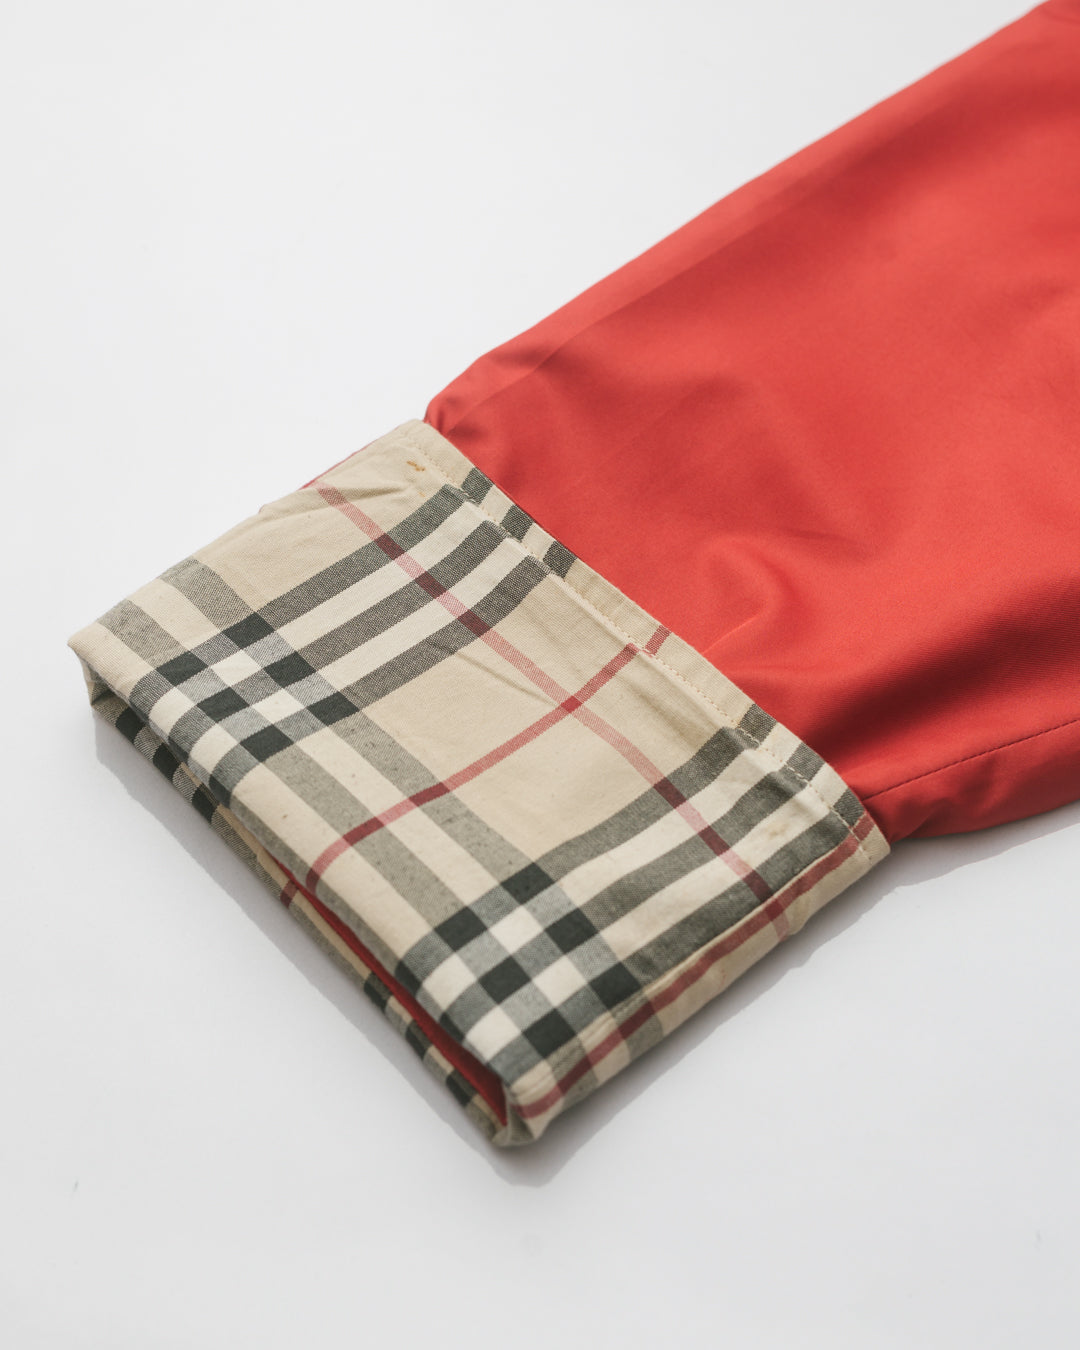 Burberry red short padded coat